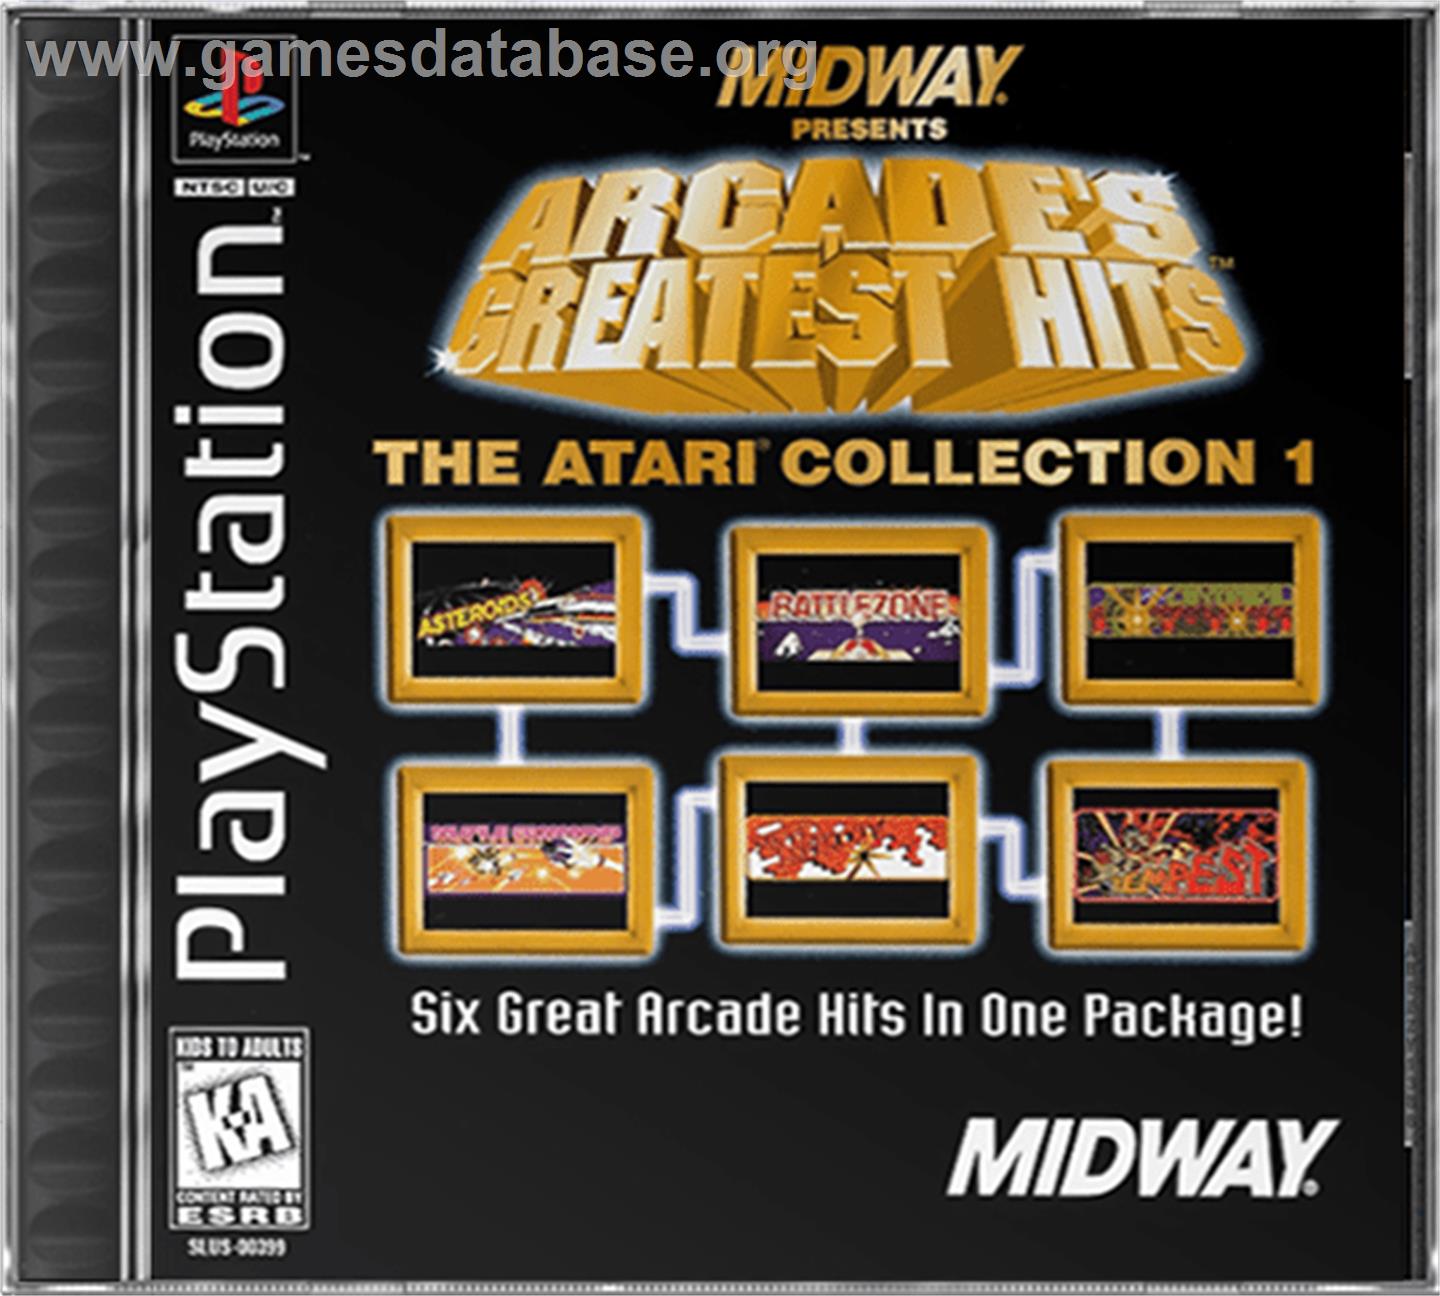 Arcade's Greatest Hits: The Atari Collection 1 - Sony Playstation - Artwork - Box